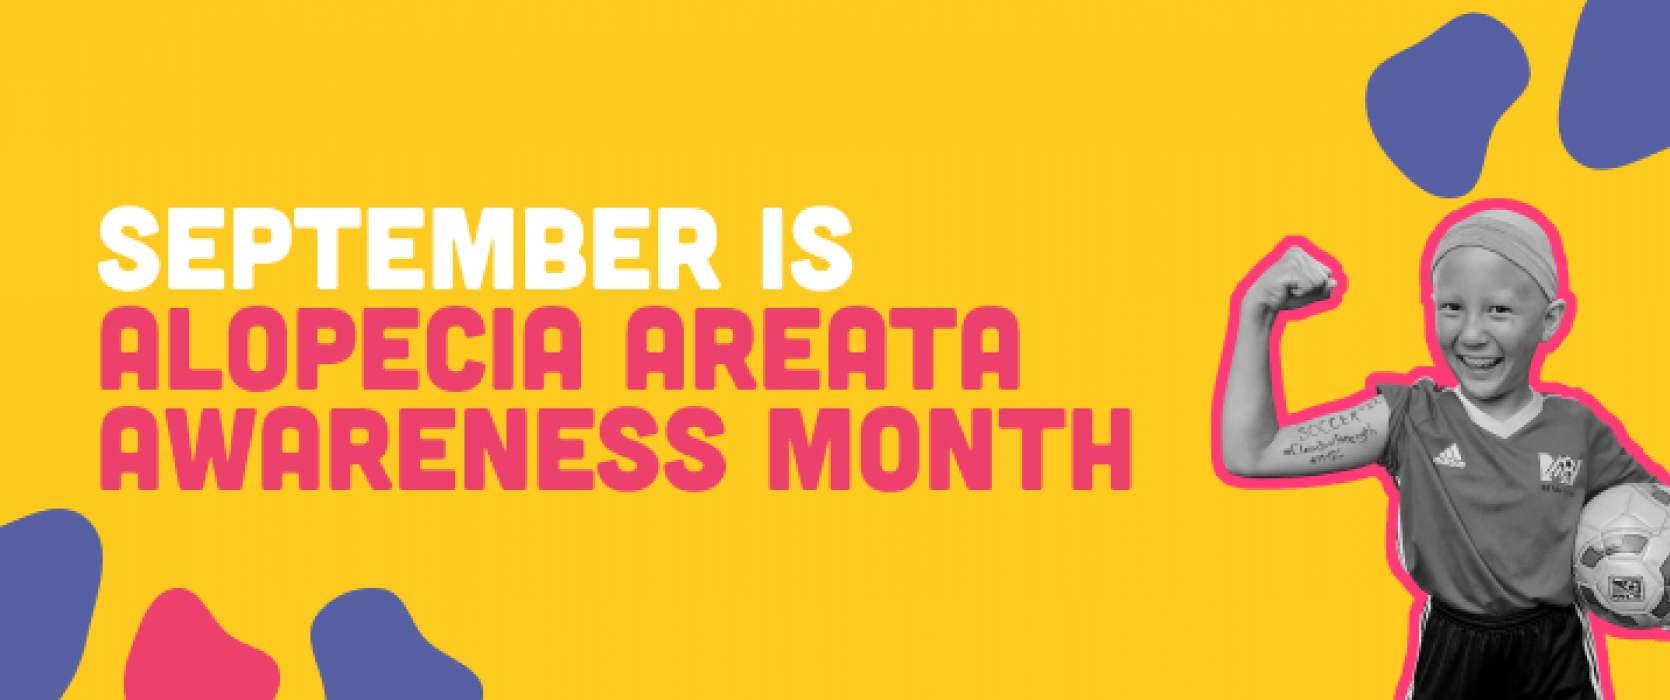 Claim Your Strength Challenge! | National Alopecia Areata Foundation